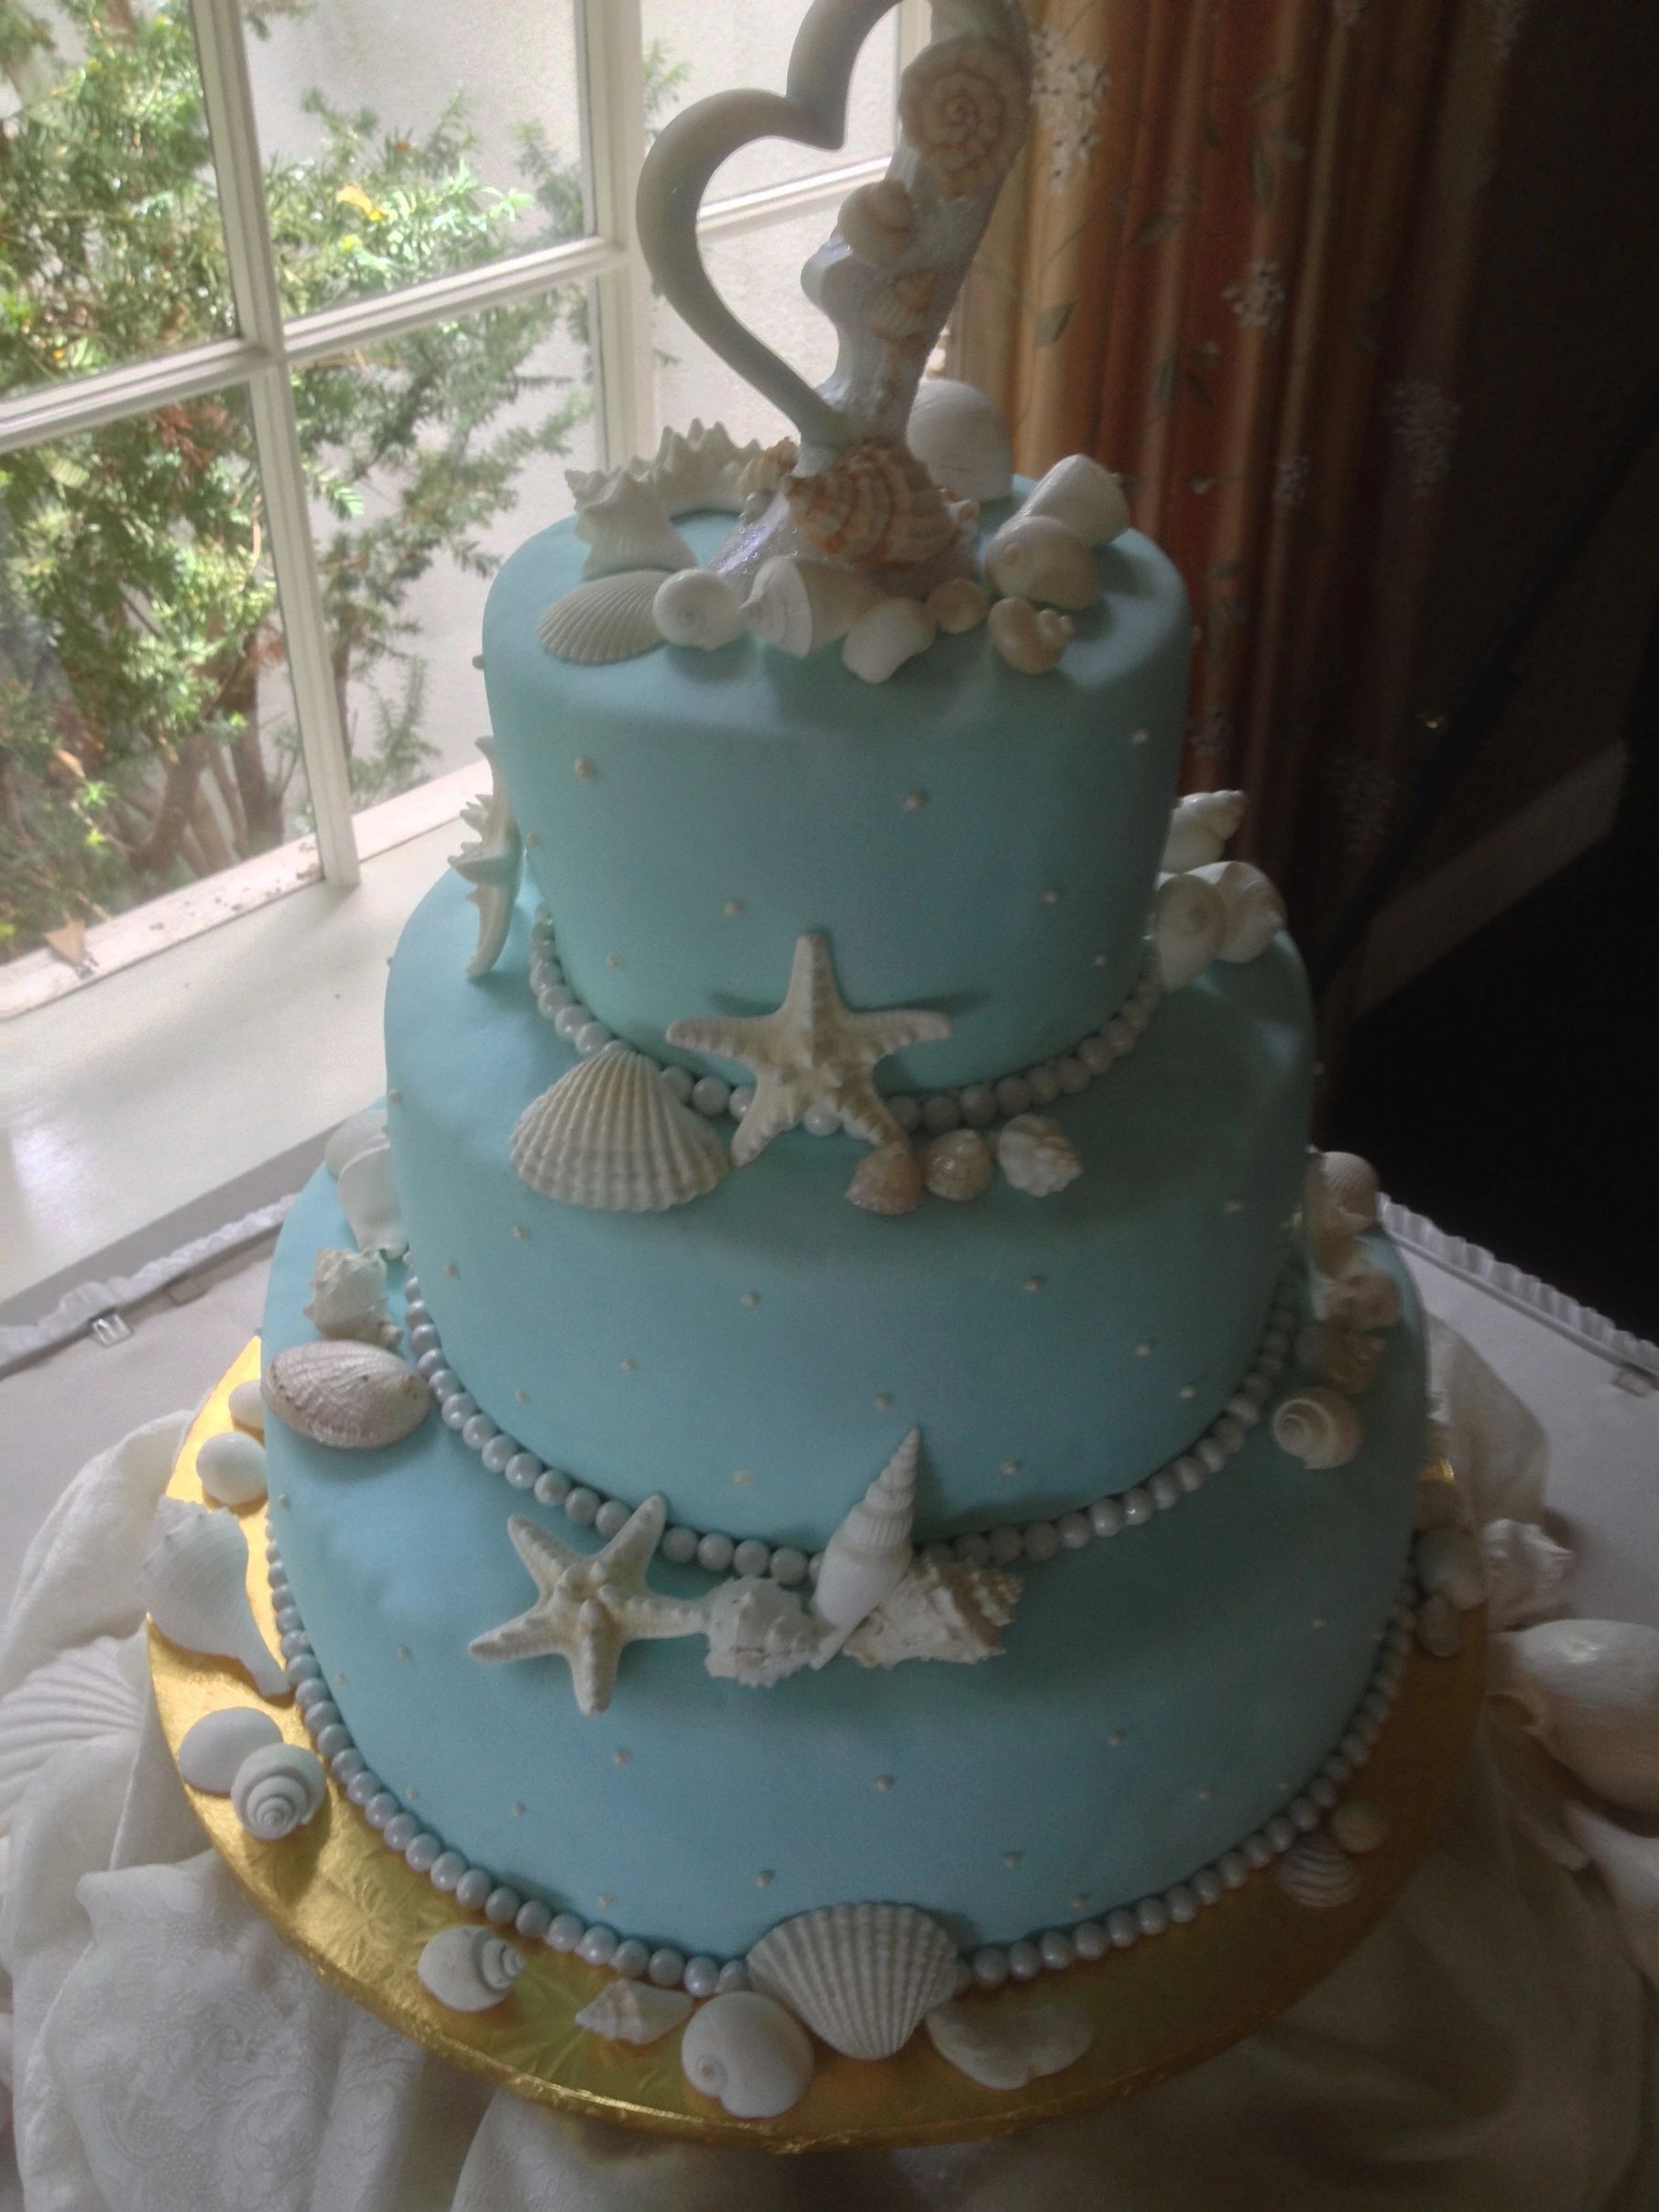 A seaside wedding cake